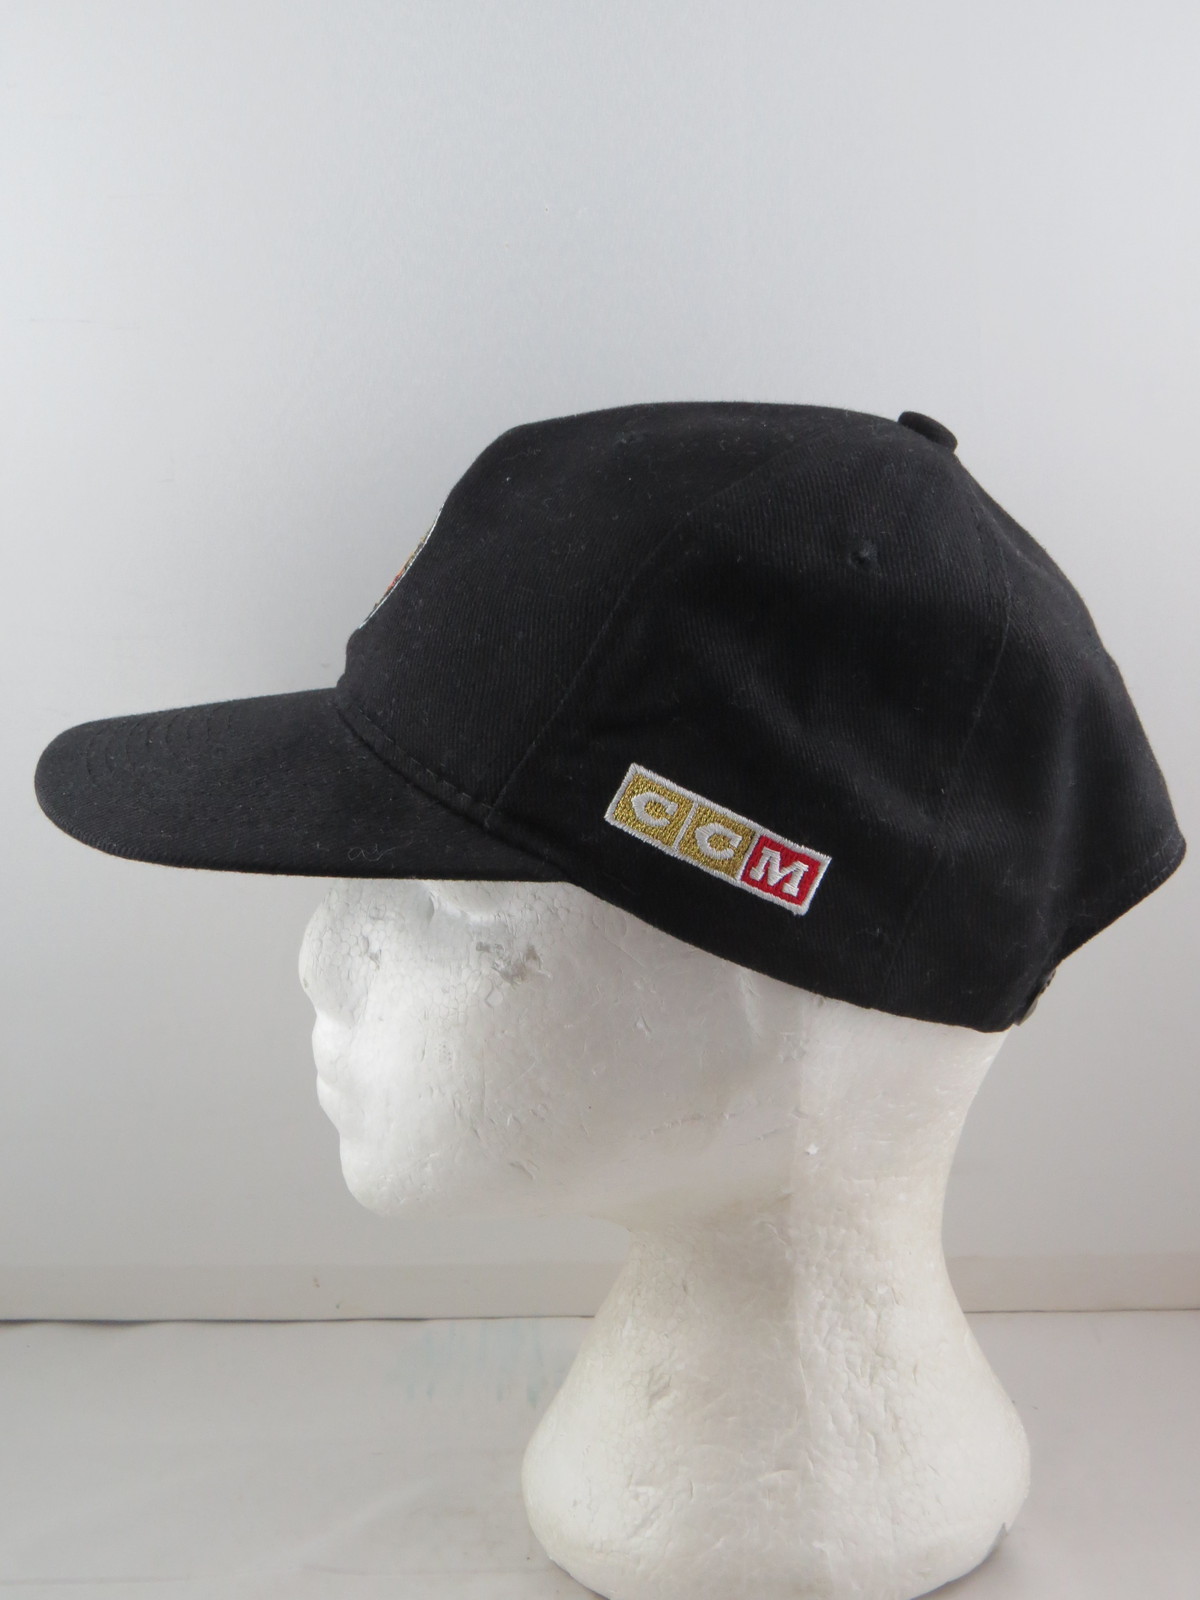 Ottawa Senators Hat (Vintage) - 100% Wool By Starter - Adult Snapback